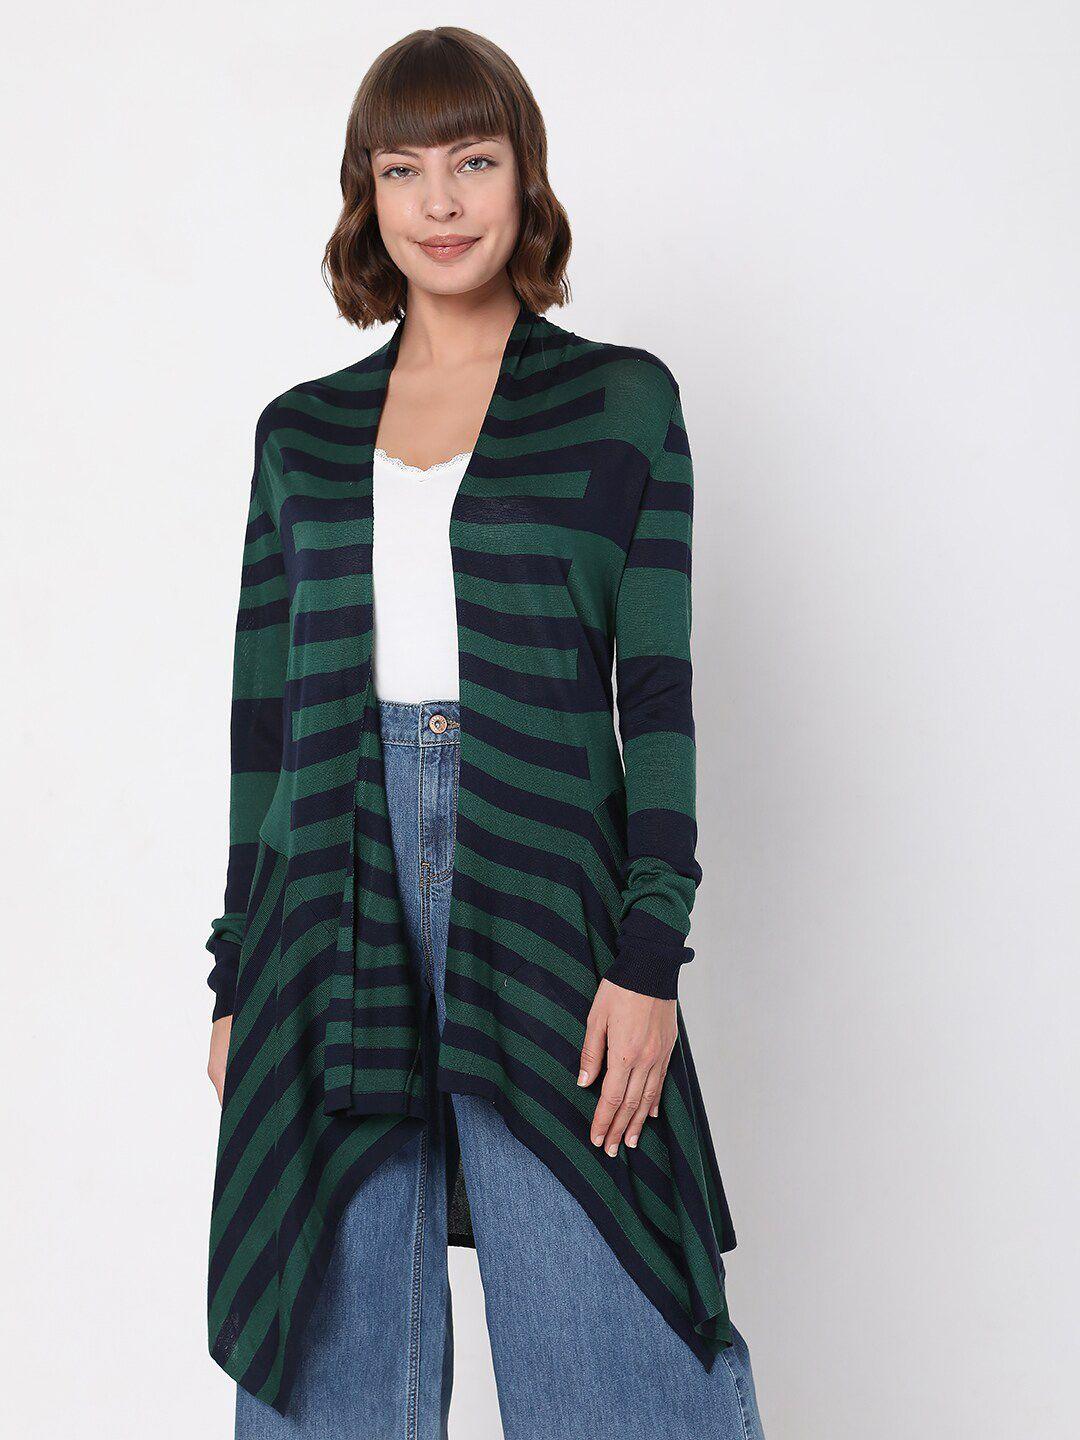 vero-moda-women-green-&-black-striped-shrug